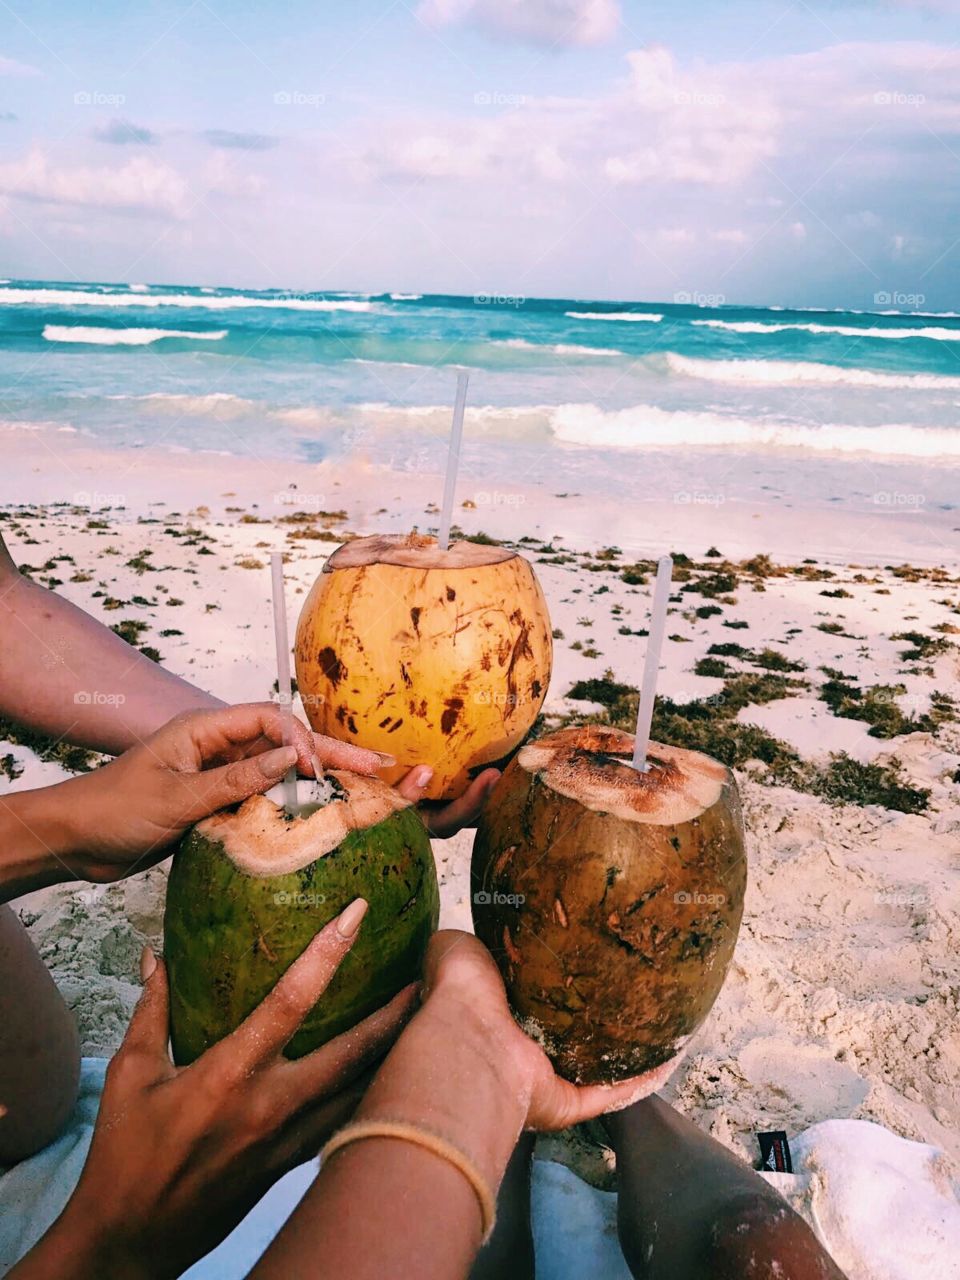 Coconuts               Instagram: pbjorkbacka 